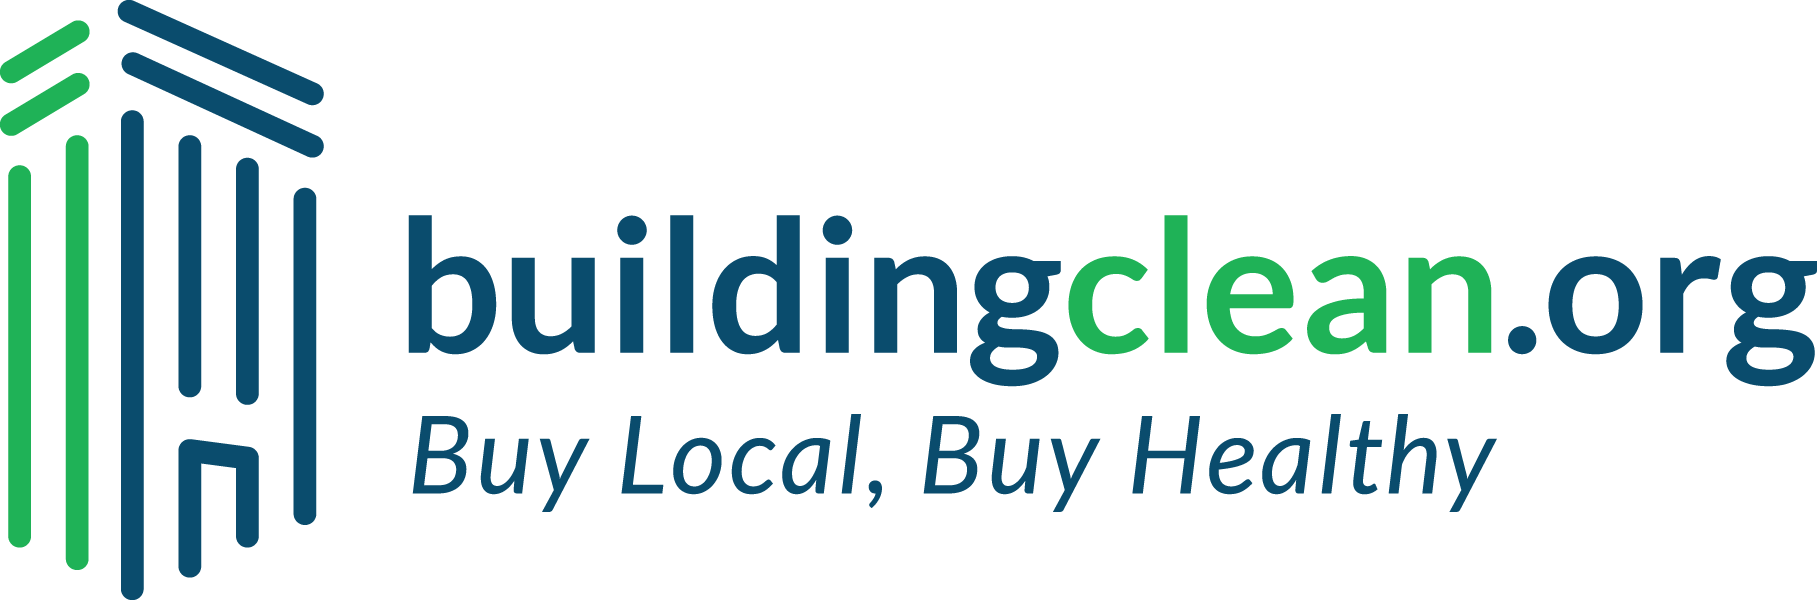 buildingclean.org logo with tagline